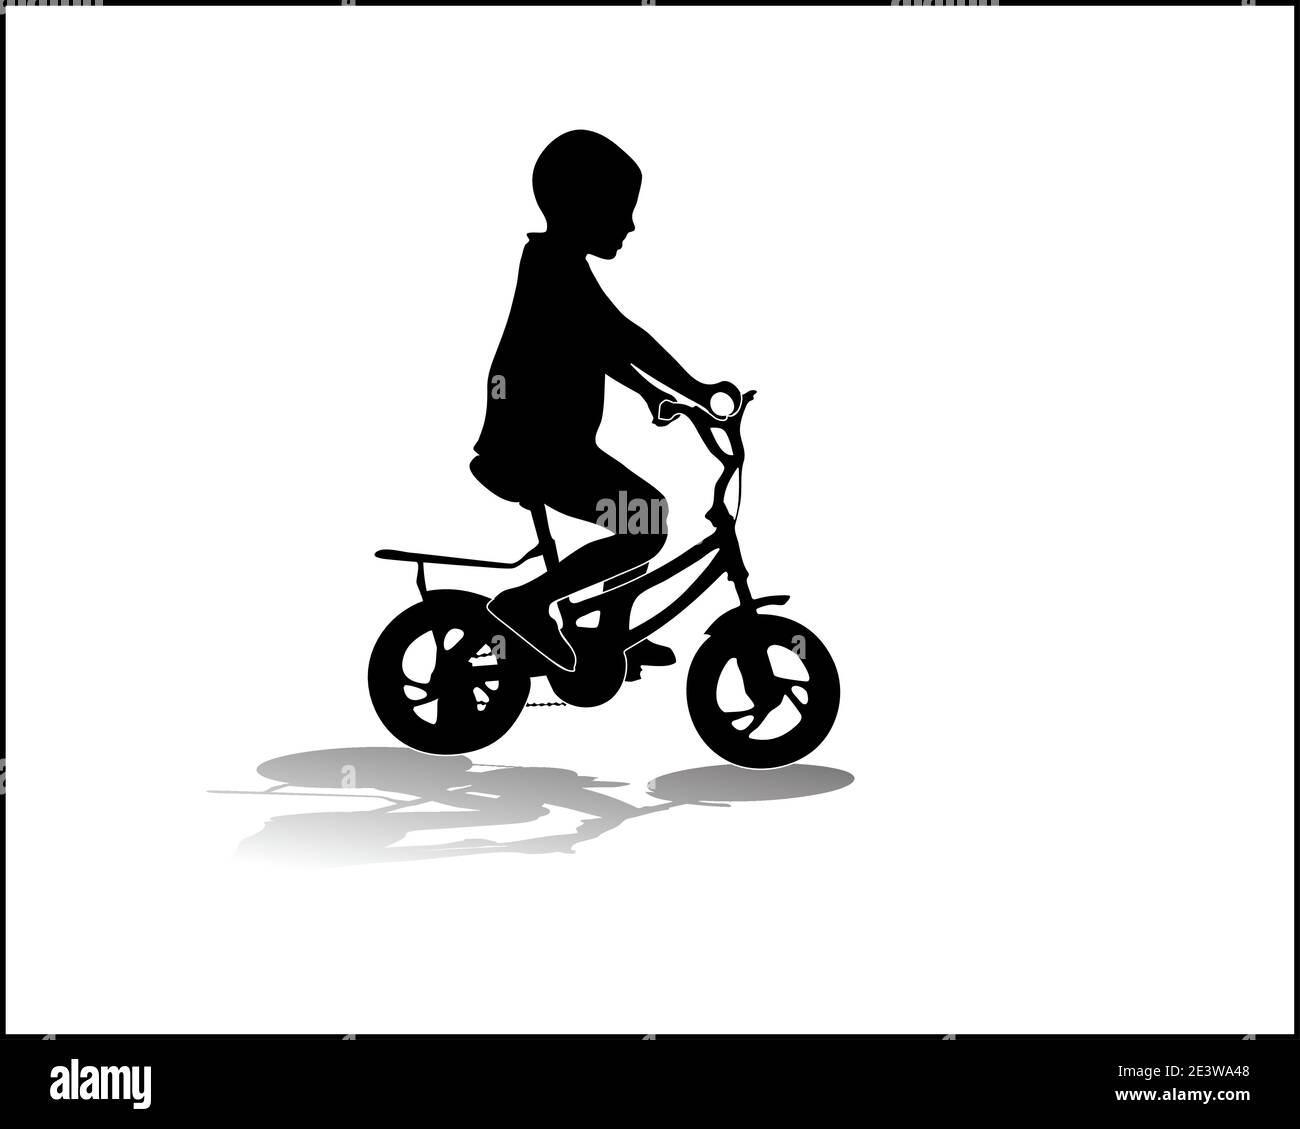 Boy on a bike — Vector silhouette Stock Vector